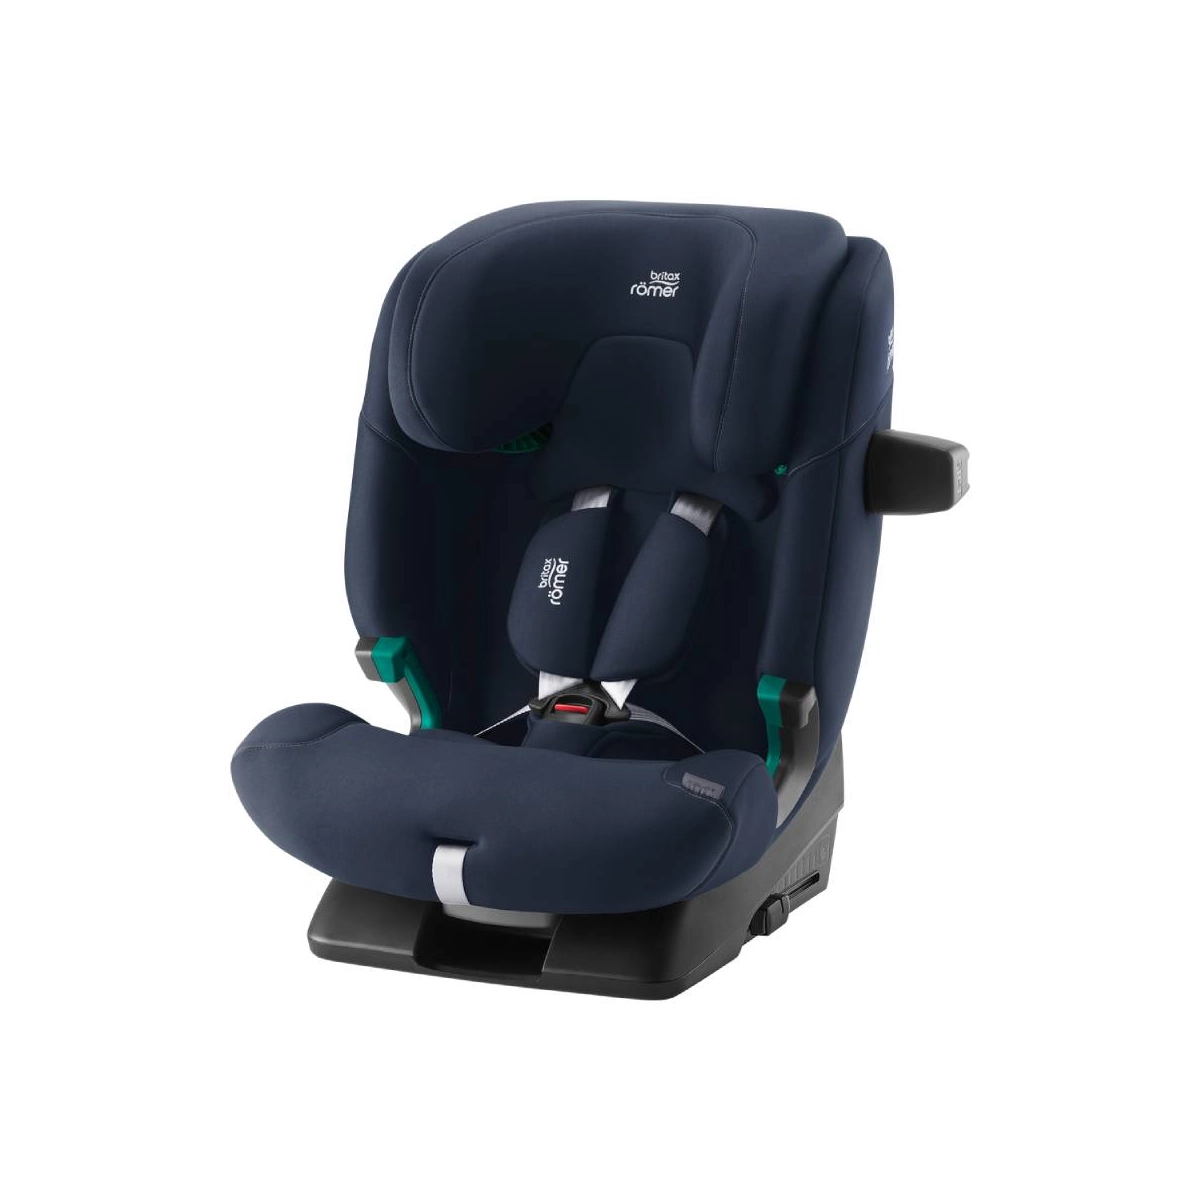 Britax Advansafix Pro Group 1/2/3 Car Seat